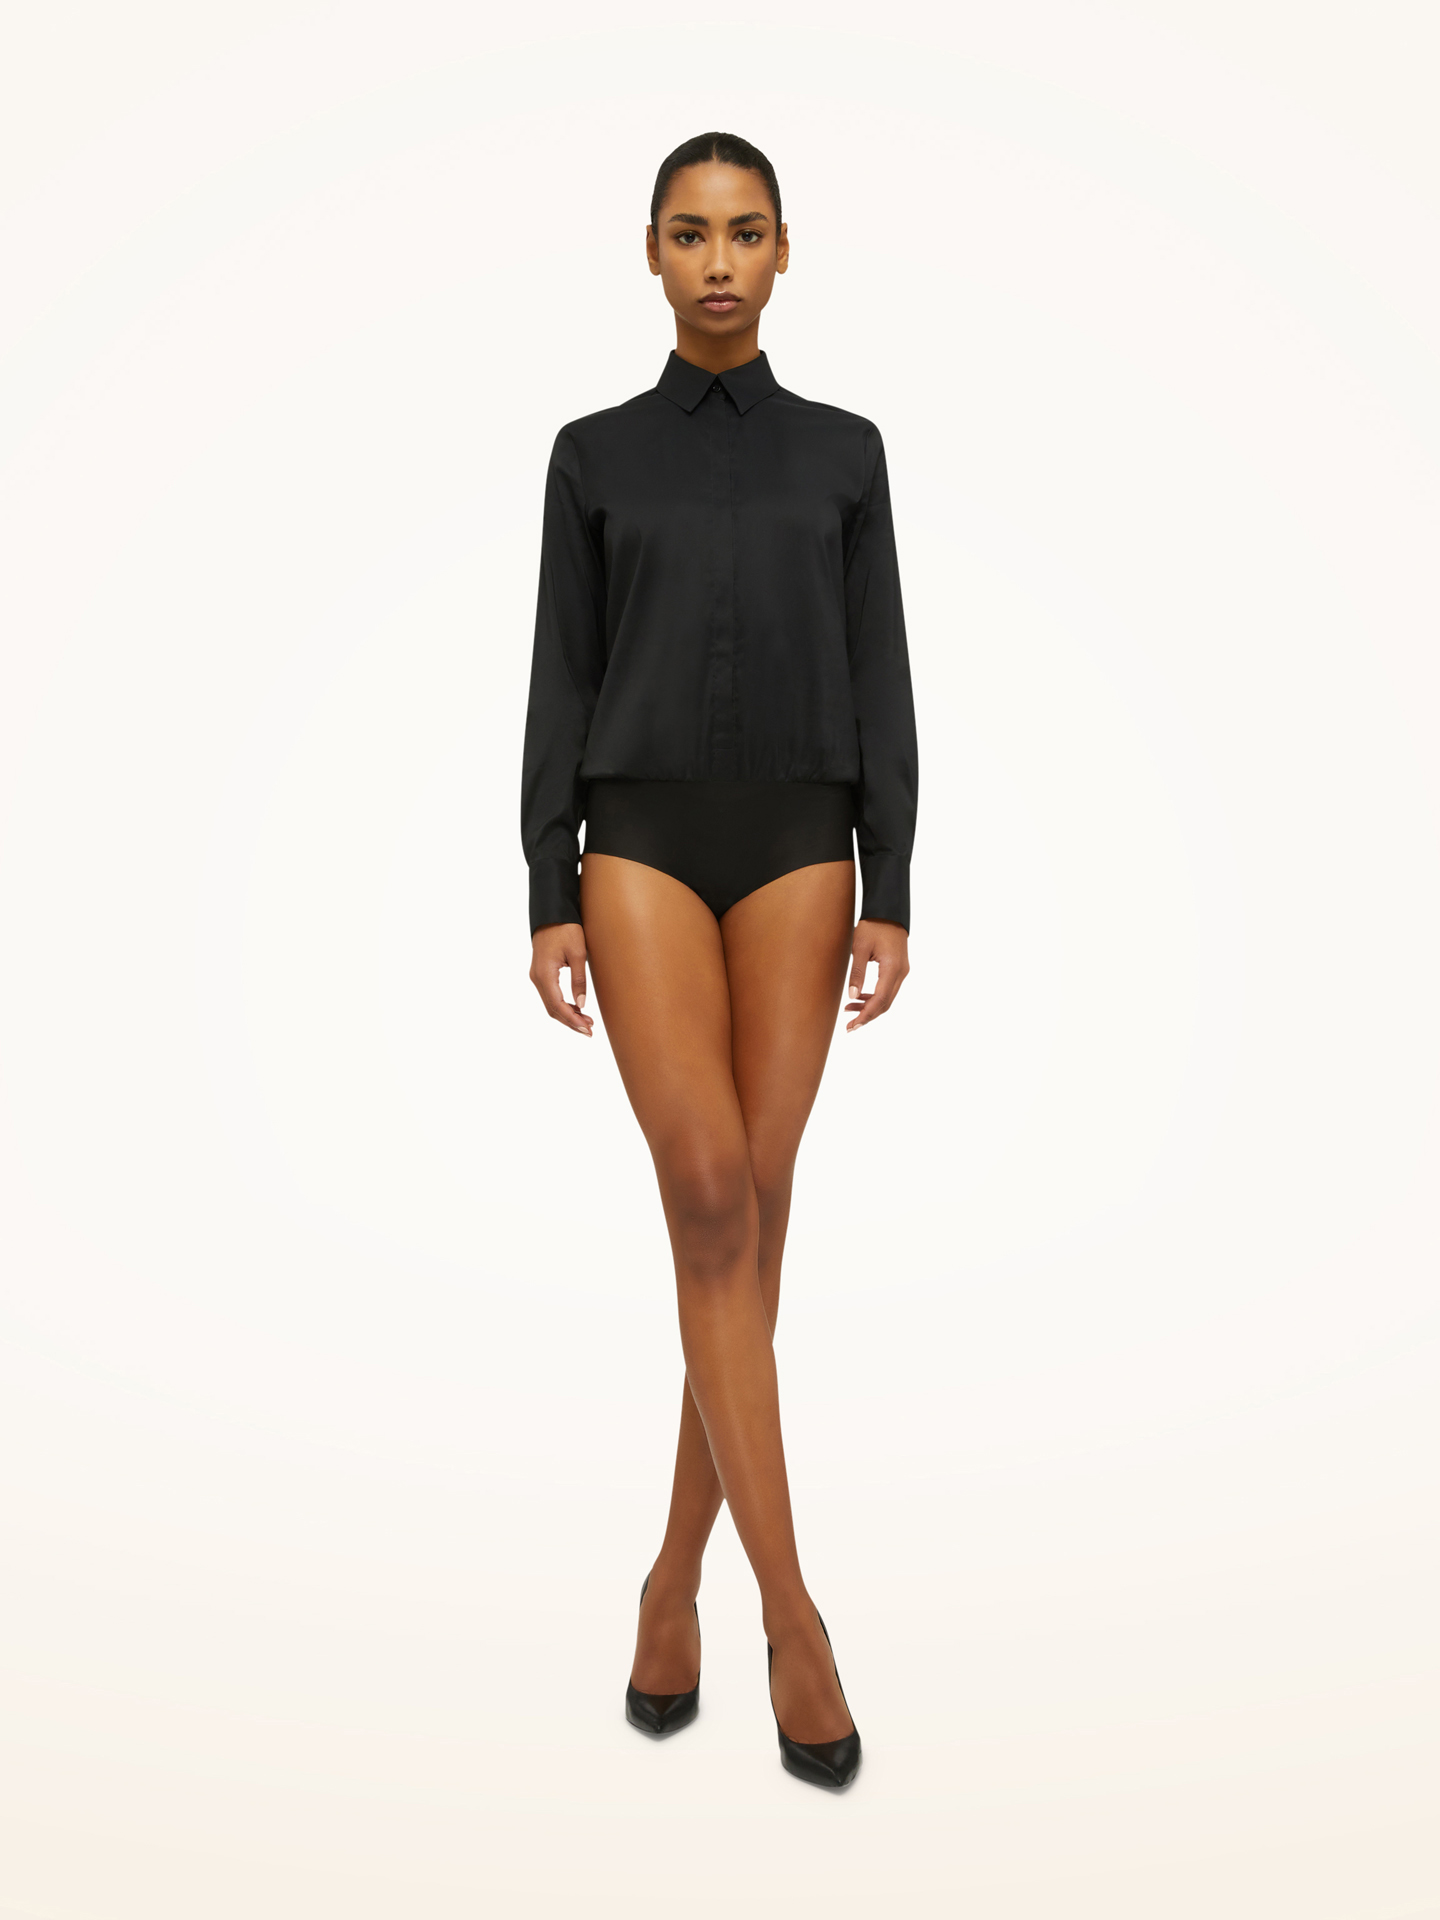 Wolford – London Effect Panty Body, Frau, black, Größe: 42